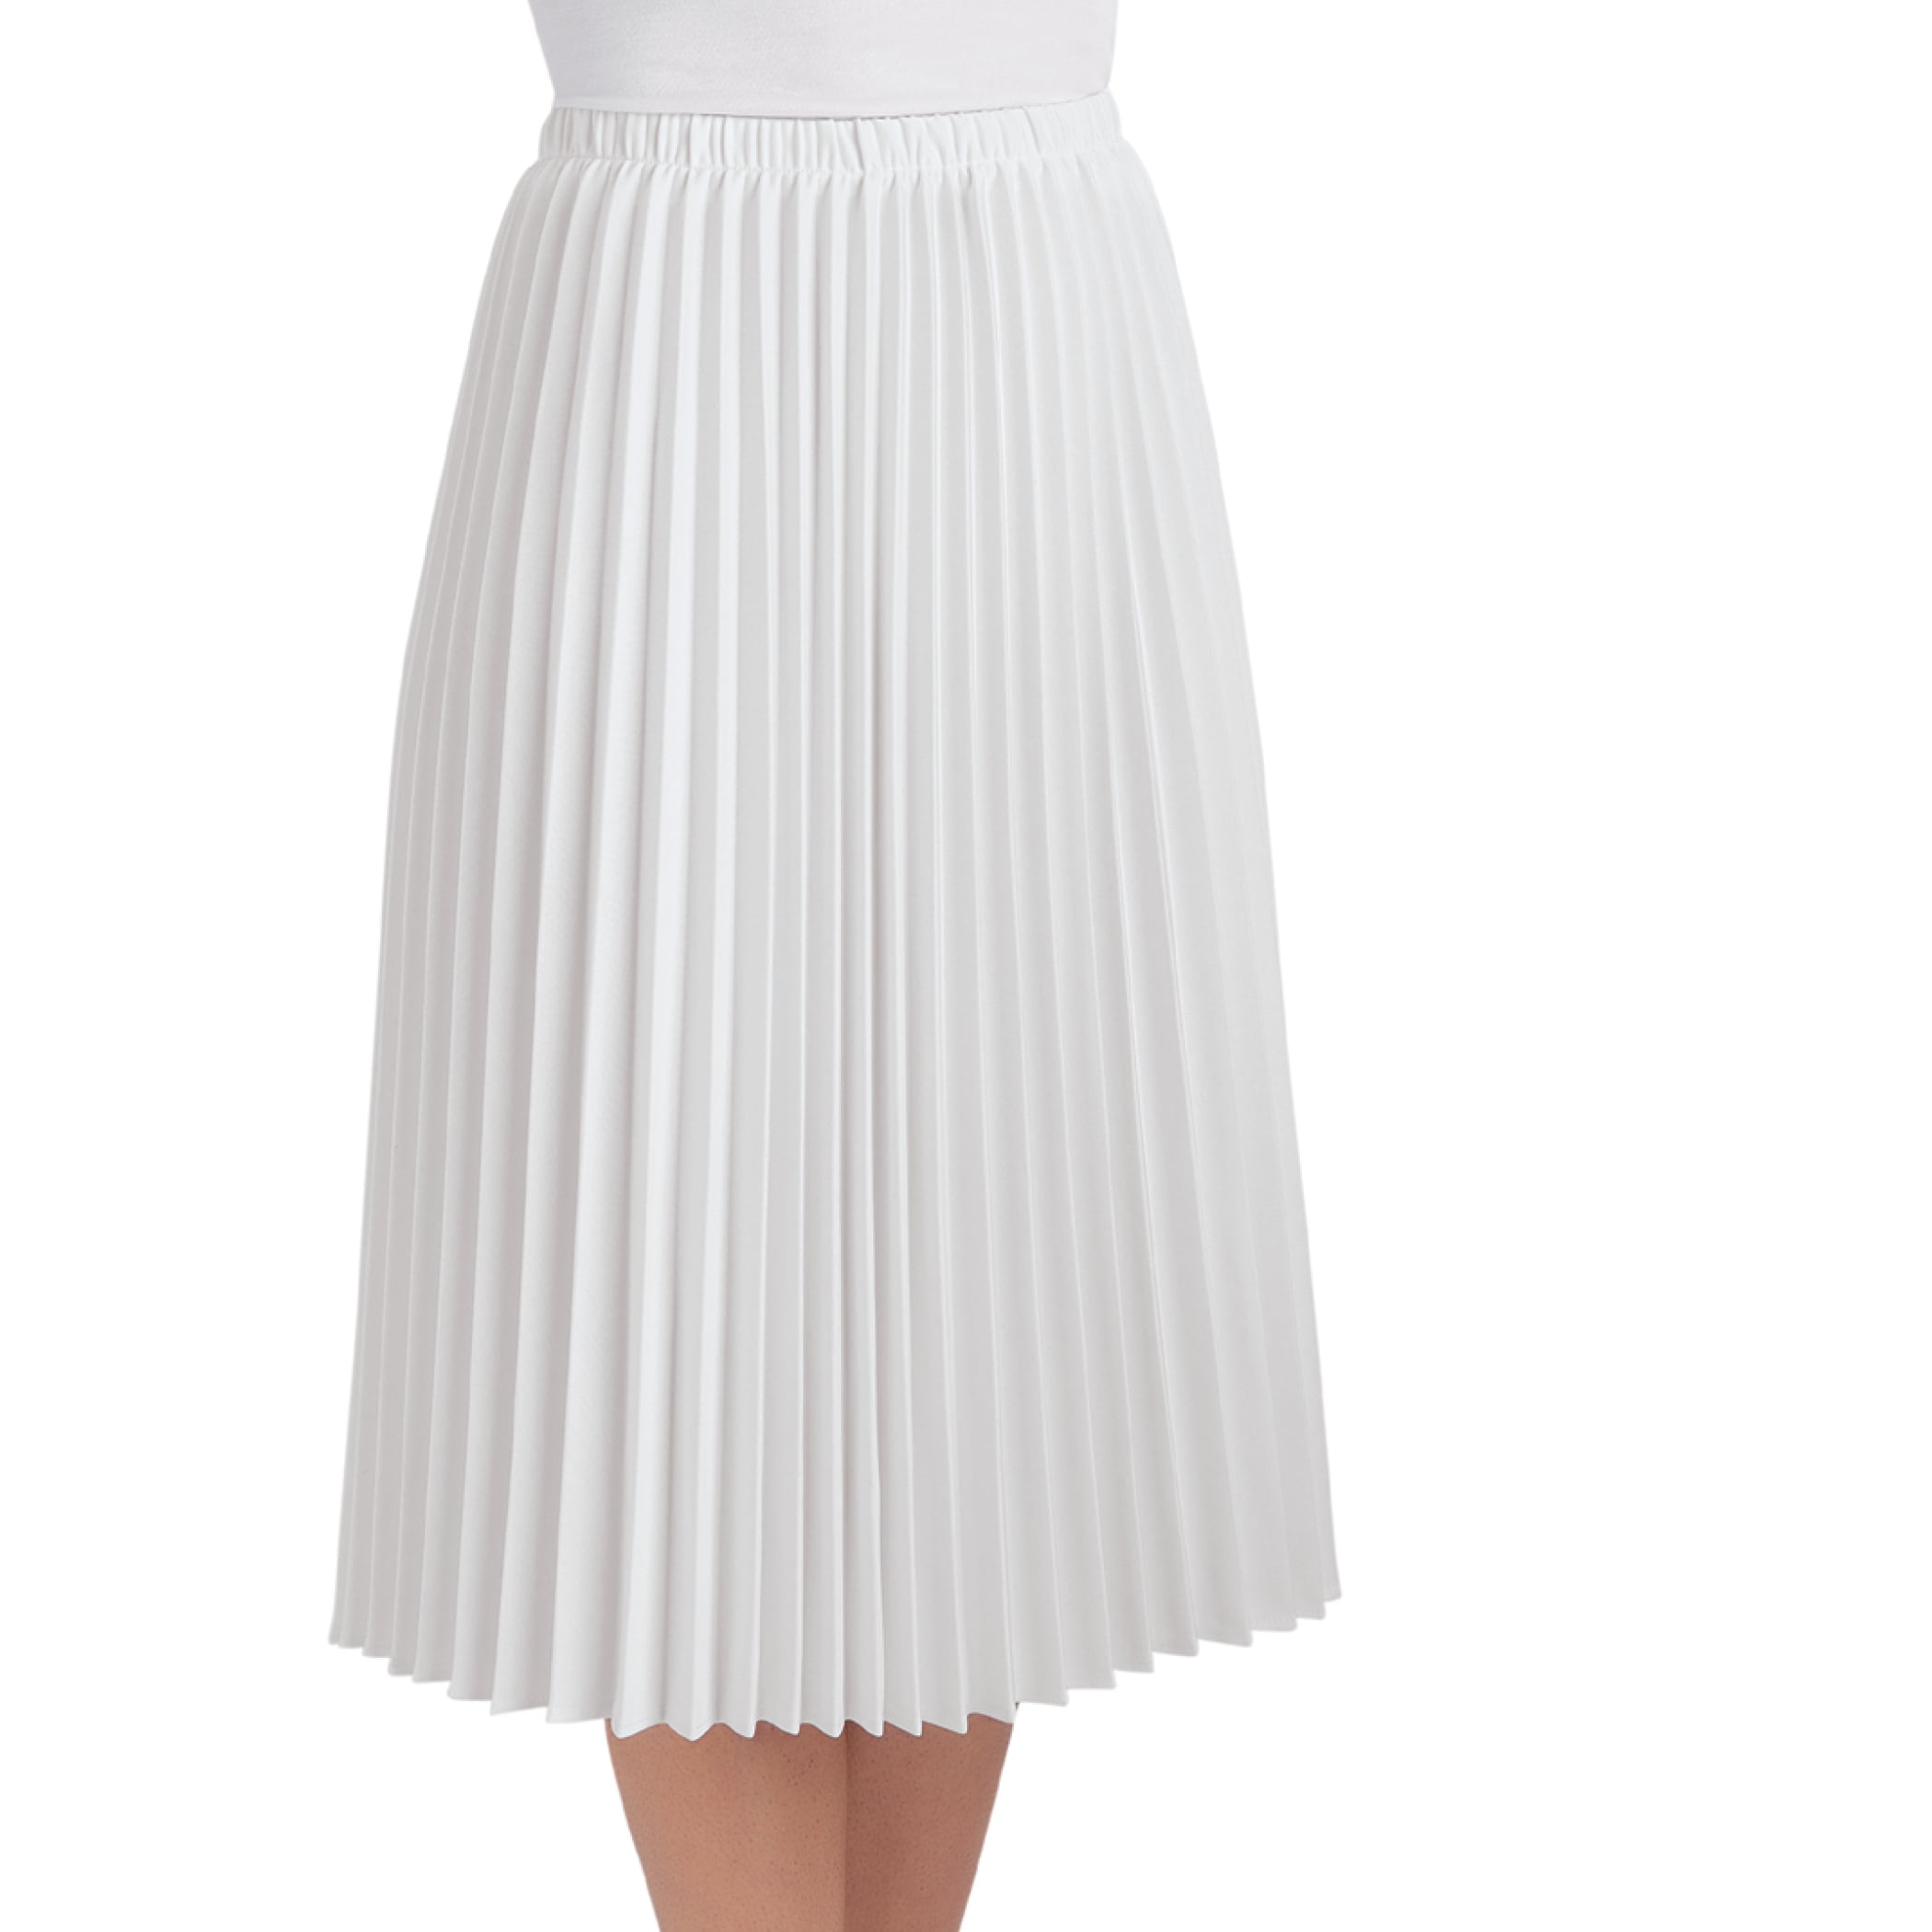 detectie ik ga akkoord met stel voor Women's Classic Pleated Mid-Length Jersey Knit Midi Skirt with Comfortable  Elastic Waistband, White, Medium - Made in The USA - Walmart.com